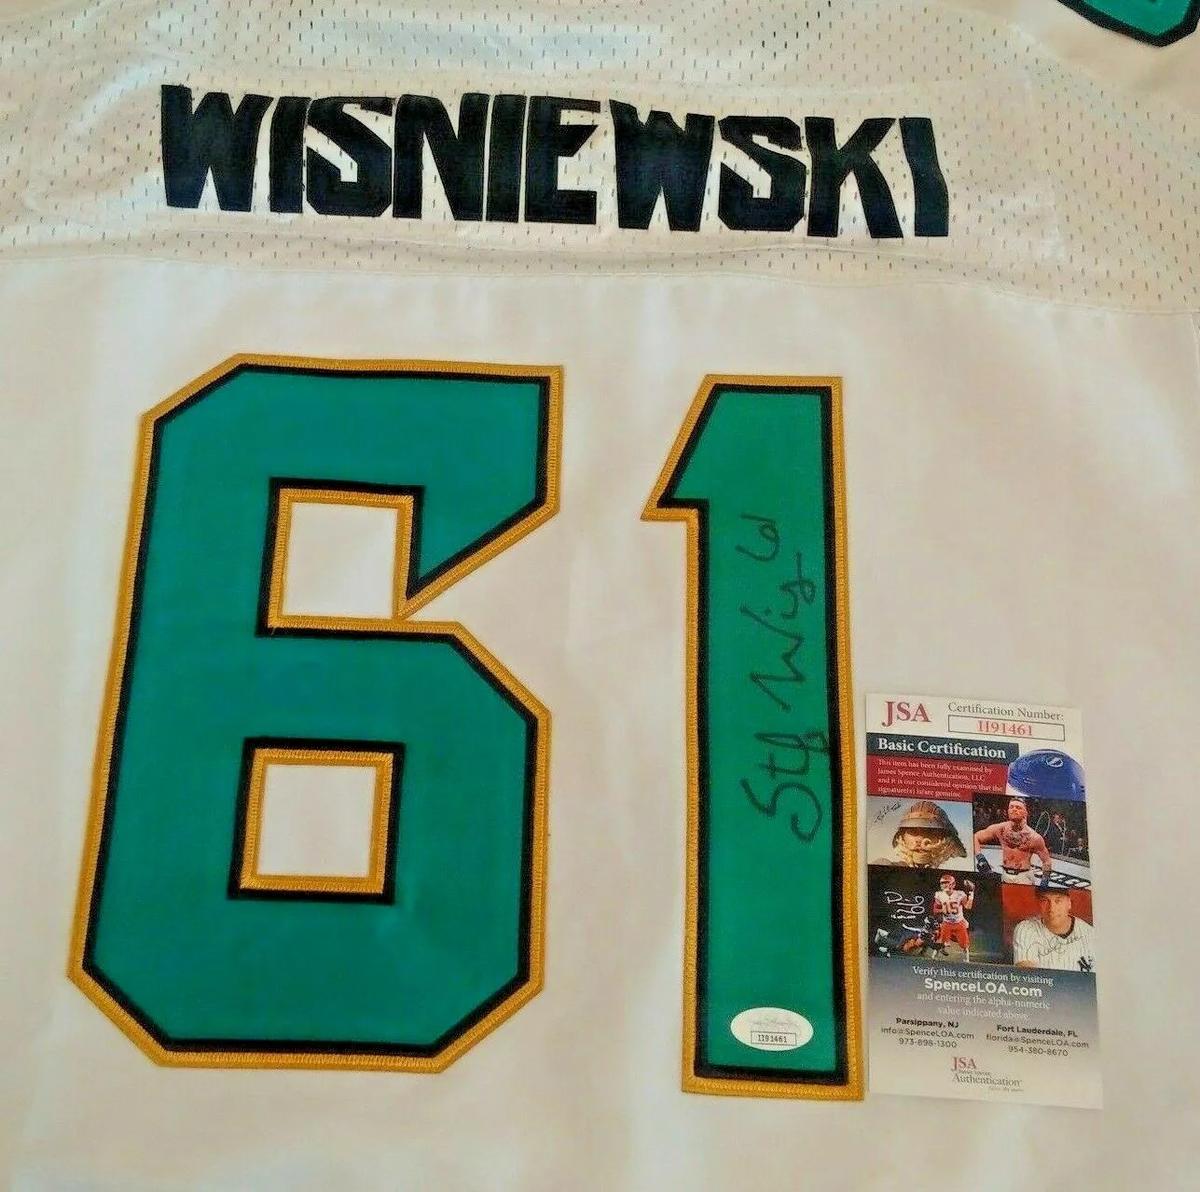 Stefan Wisniewski Autographed Signed NFL Jaguars Nike Jersey 52 JSA Penn State PSU Football